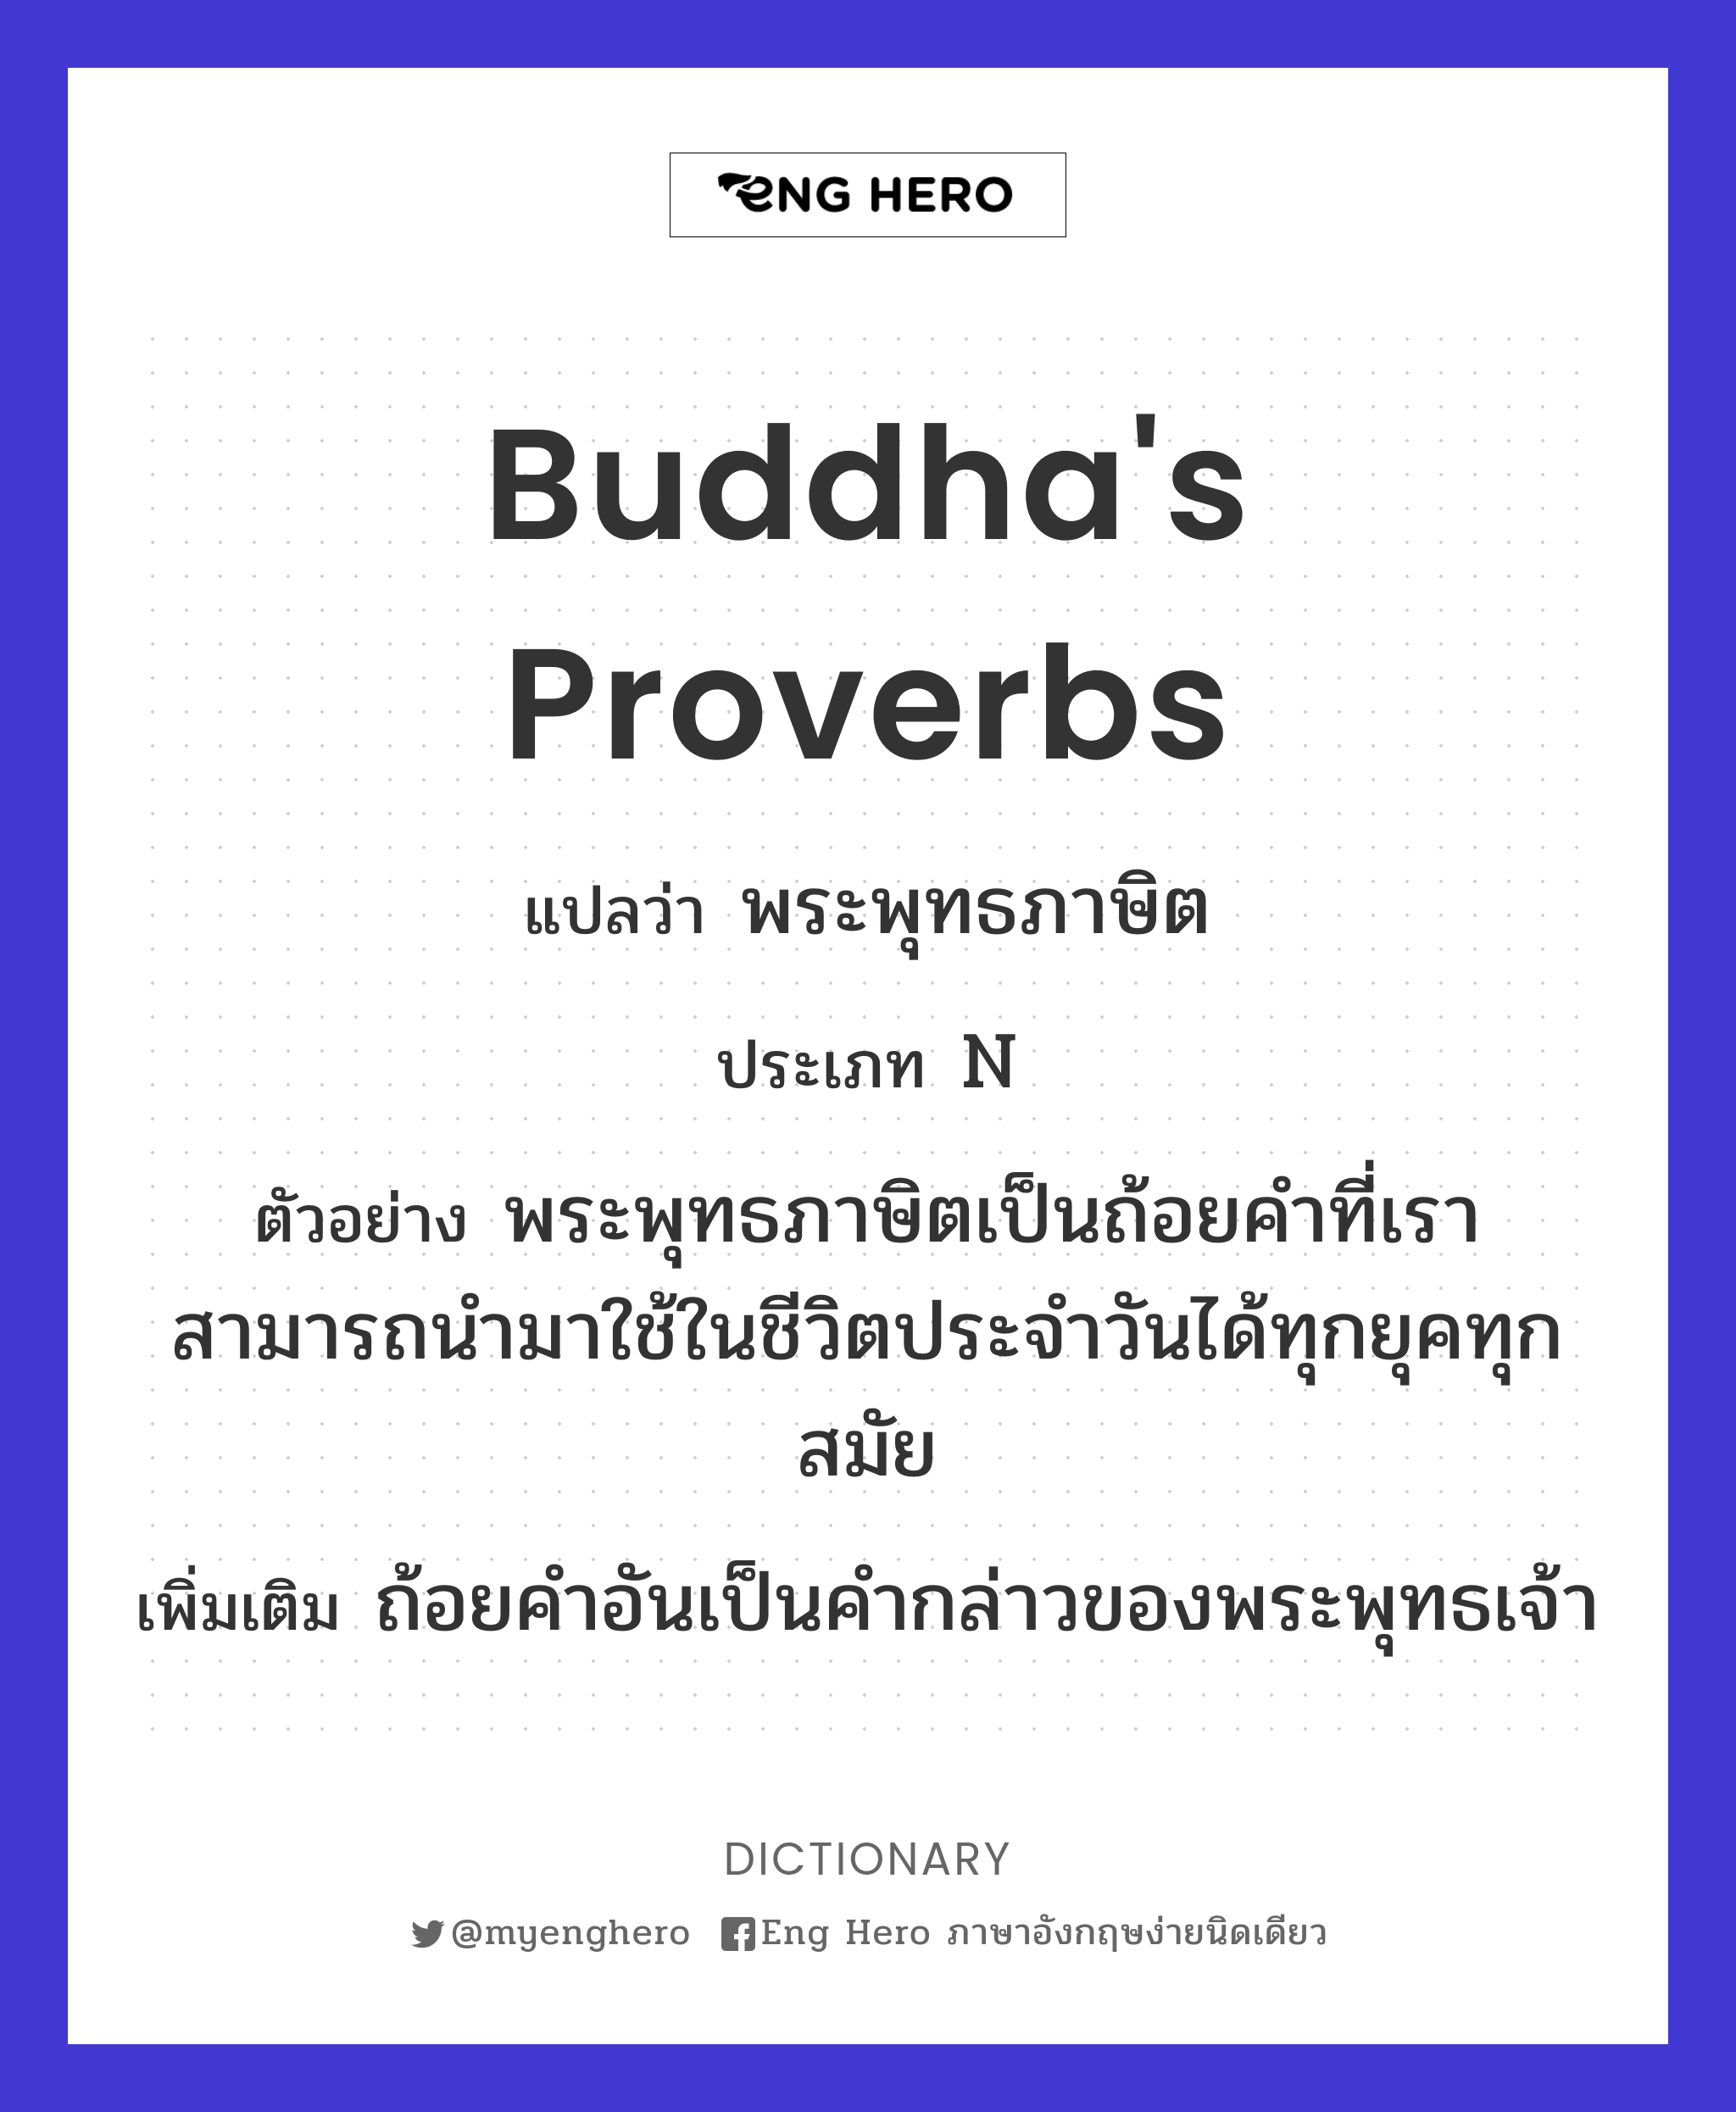 Buddha's proverbs